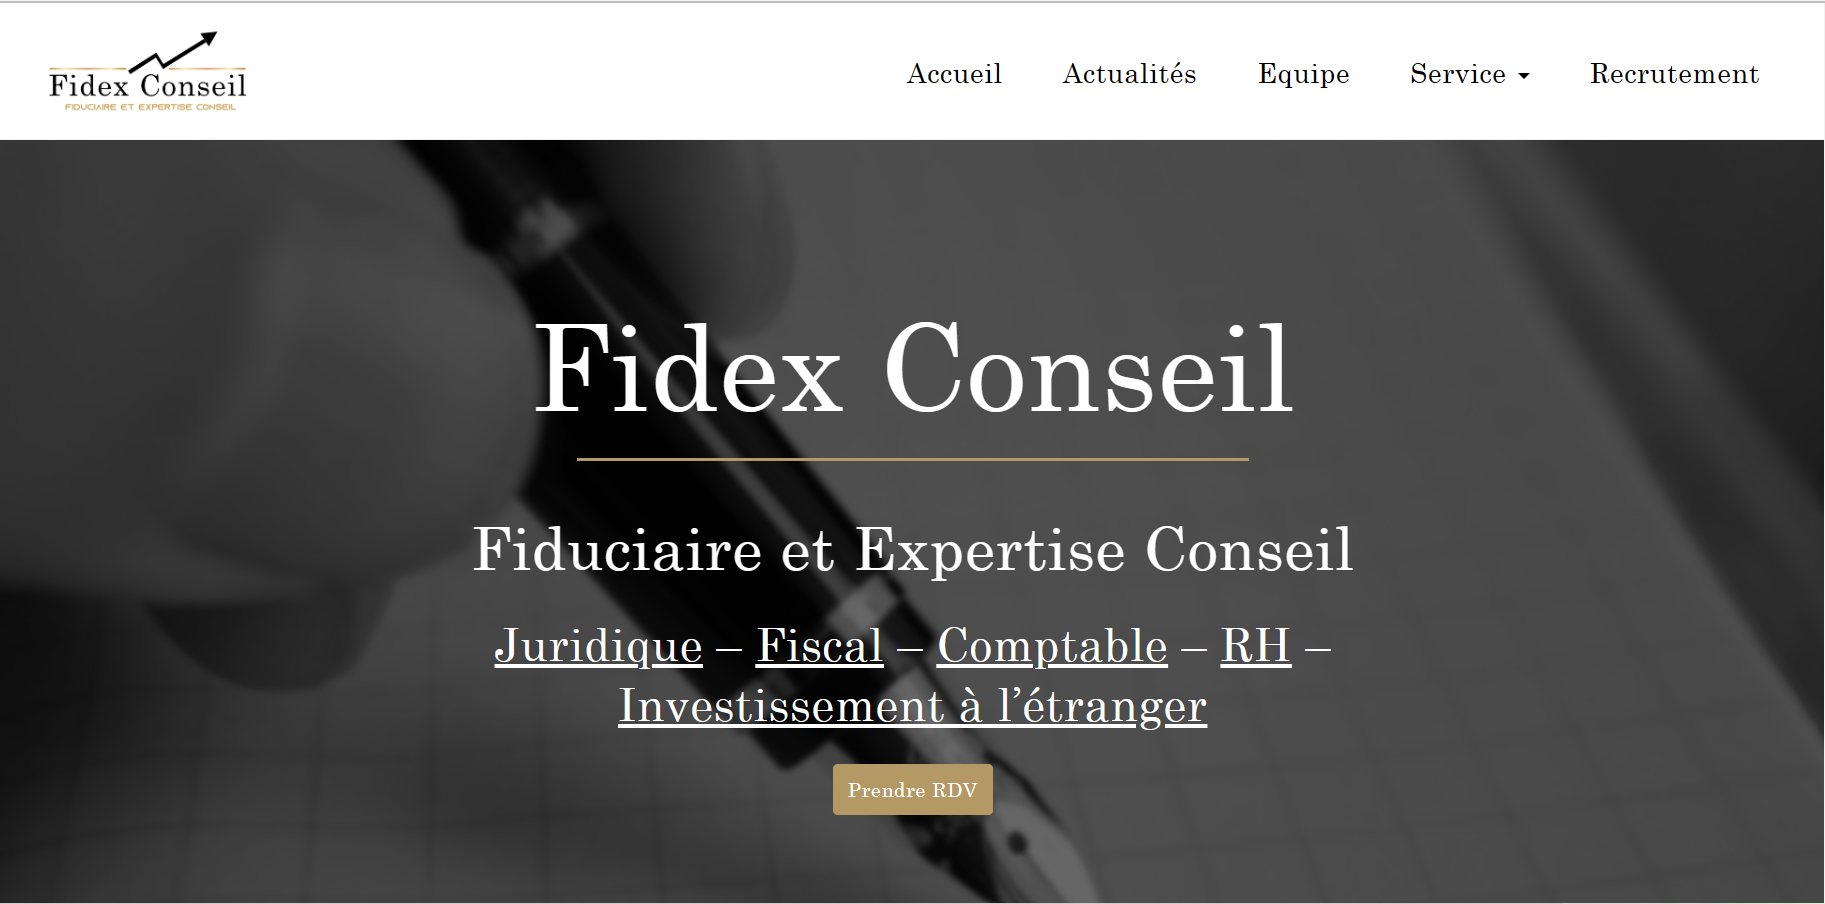 Fidex Conseil INA IT consulting